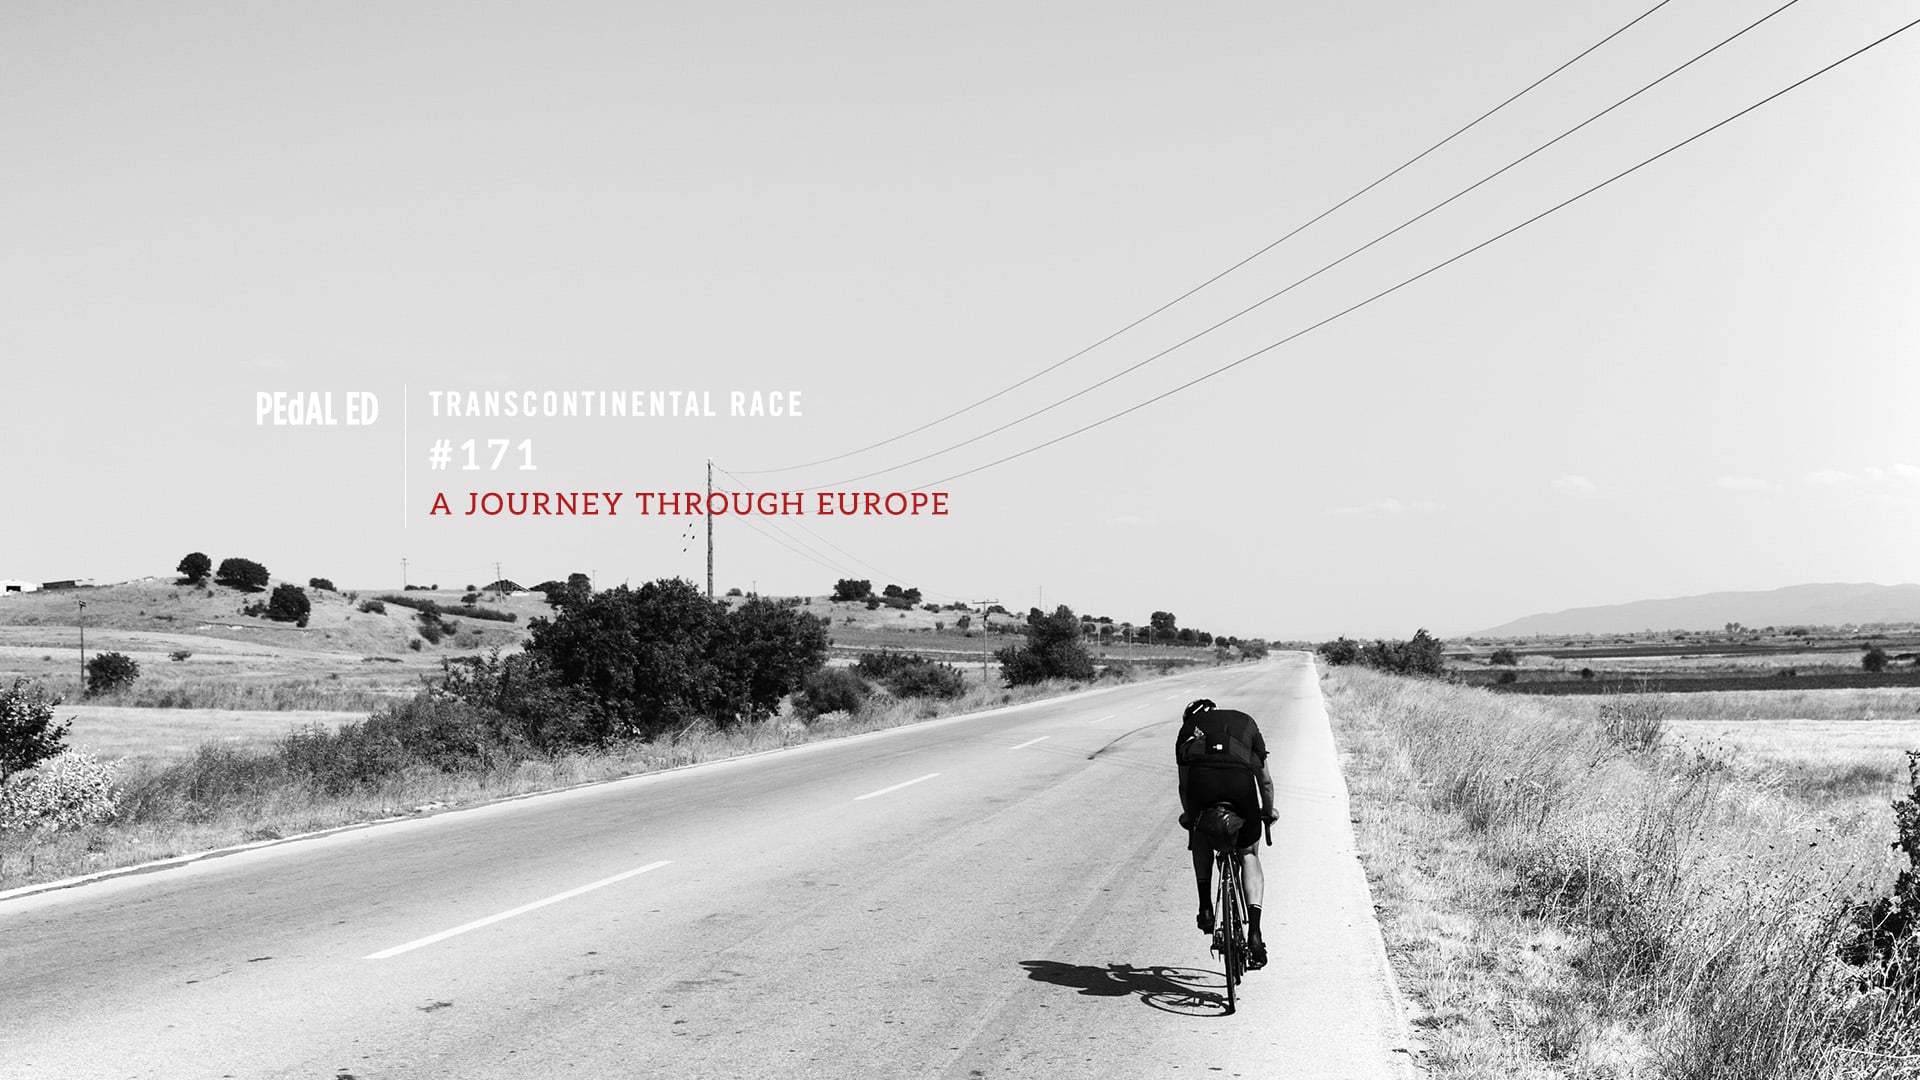 171 The Transcontinental Race journey on Vimeo